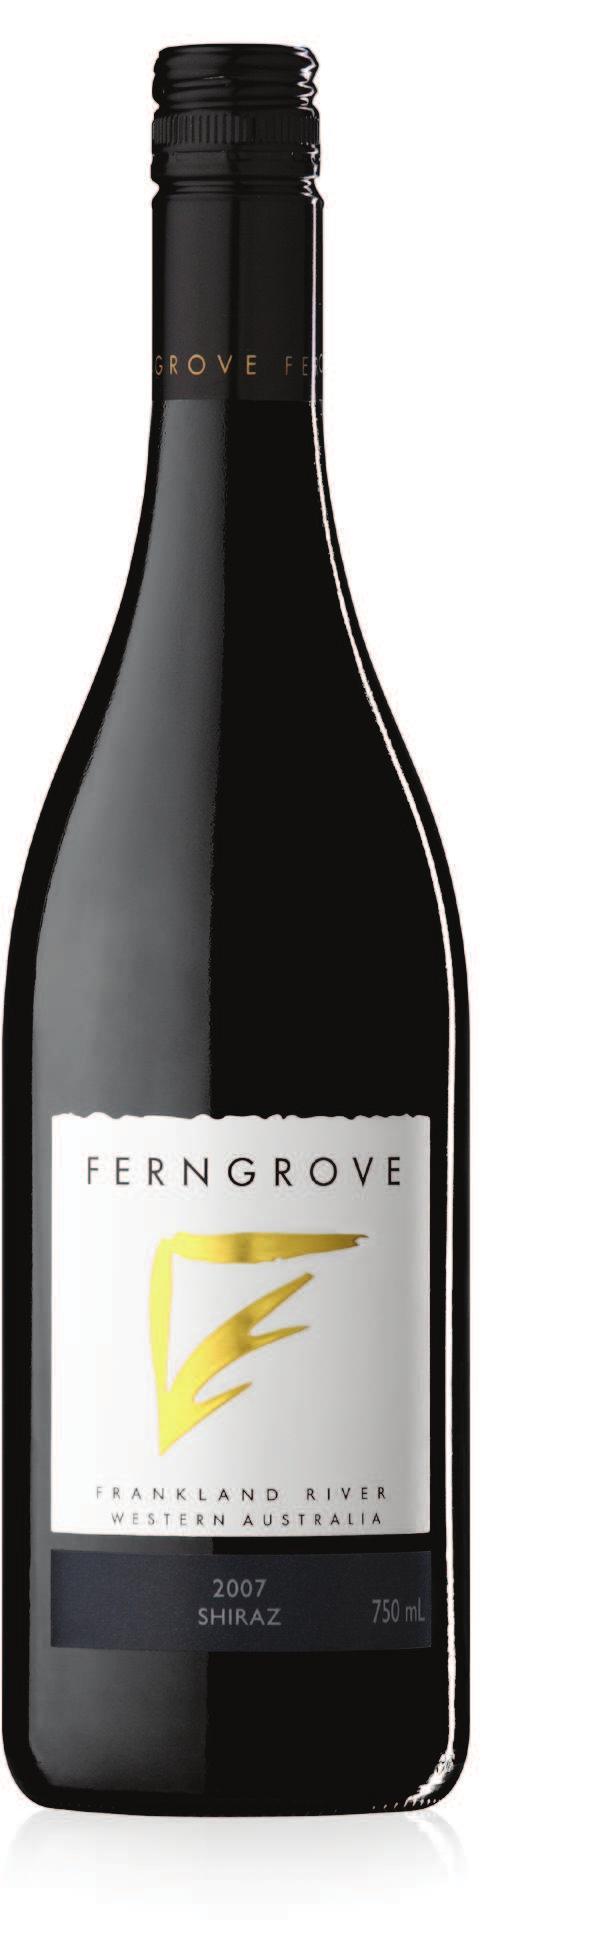 normal price 15. 99 per bottle SAVE 28.80 13.59 18.99 Ferngrove Estate Shiraz 2007 Ferngrove Estate, established in 1999, has a reputation as a premium wine producer in the Frankland River region.